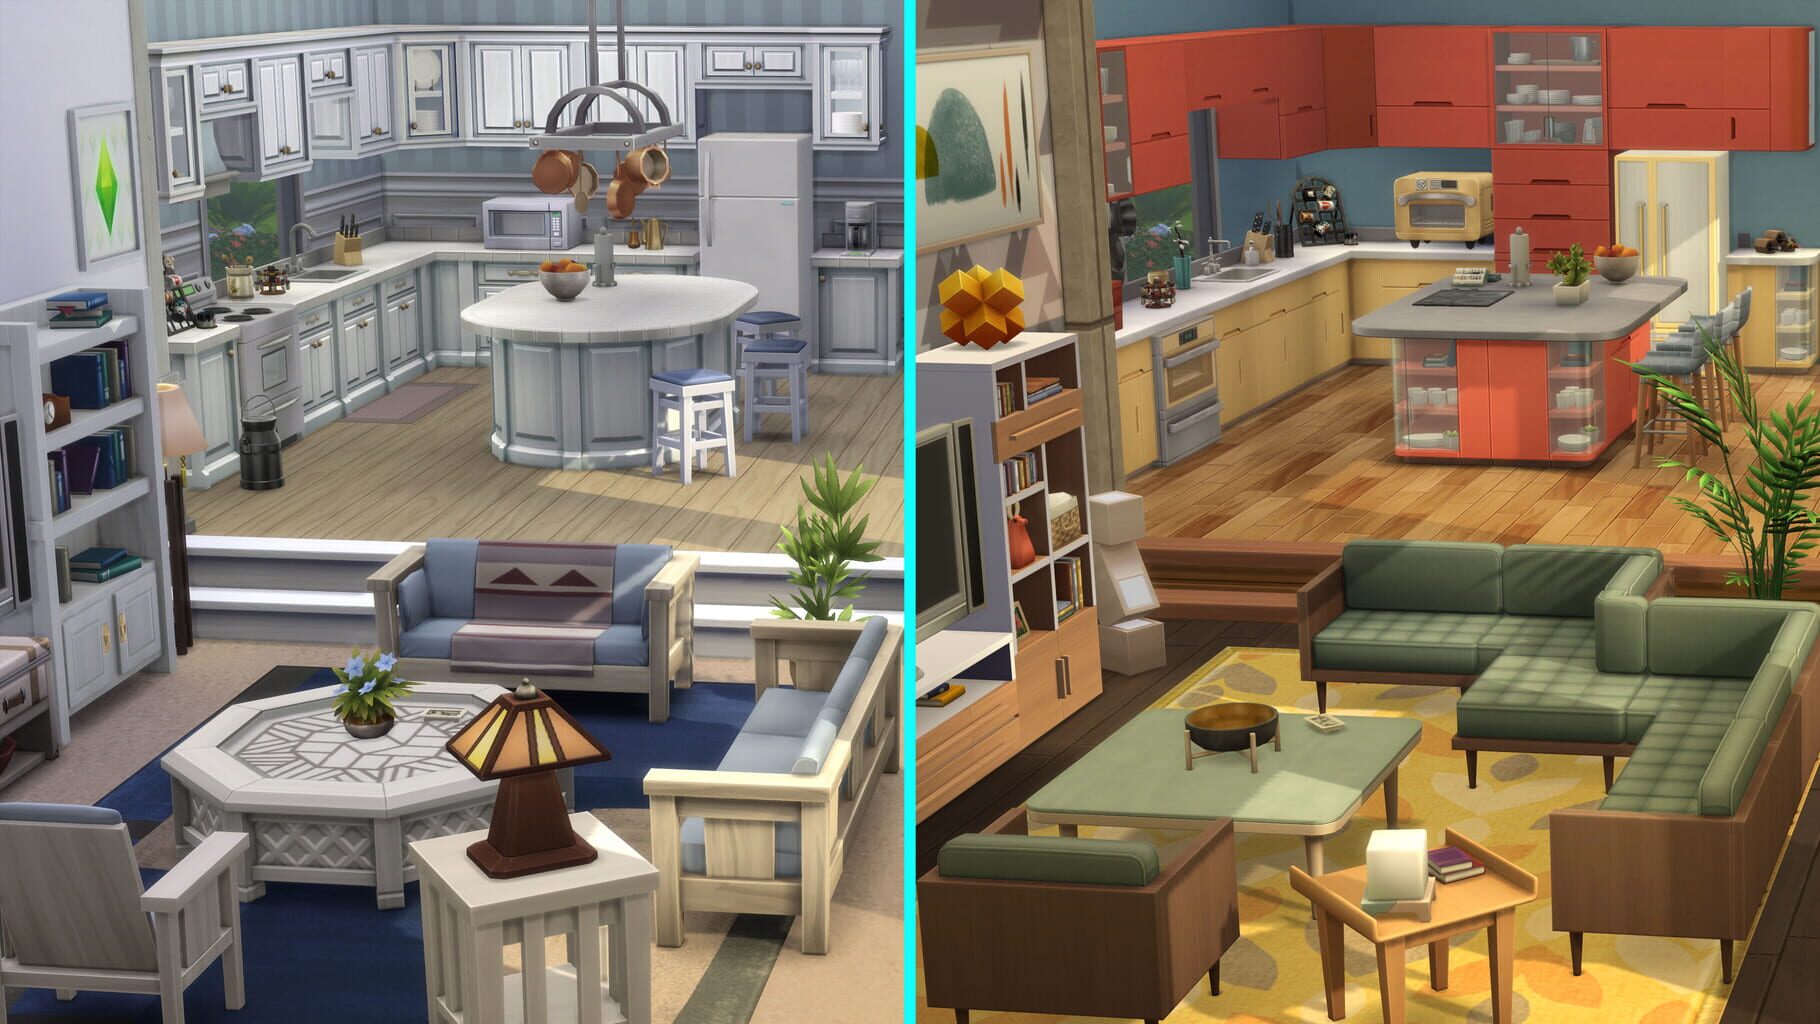 Arte - The Sims 4: Dream Home Decorator